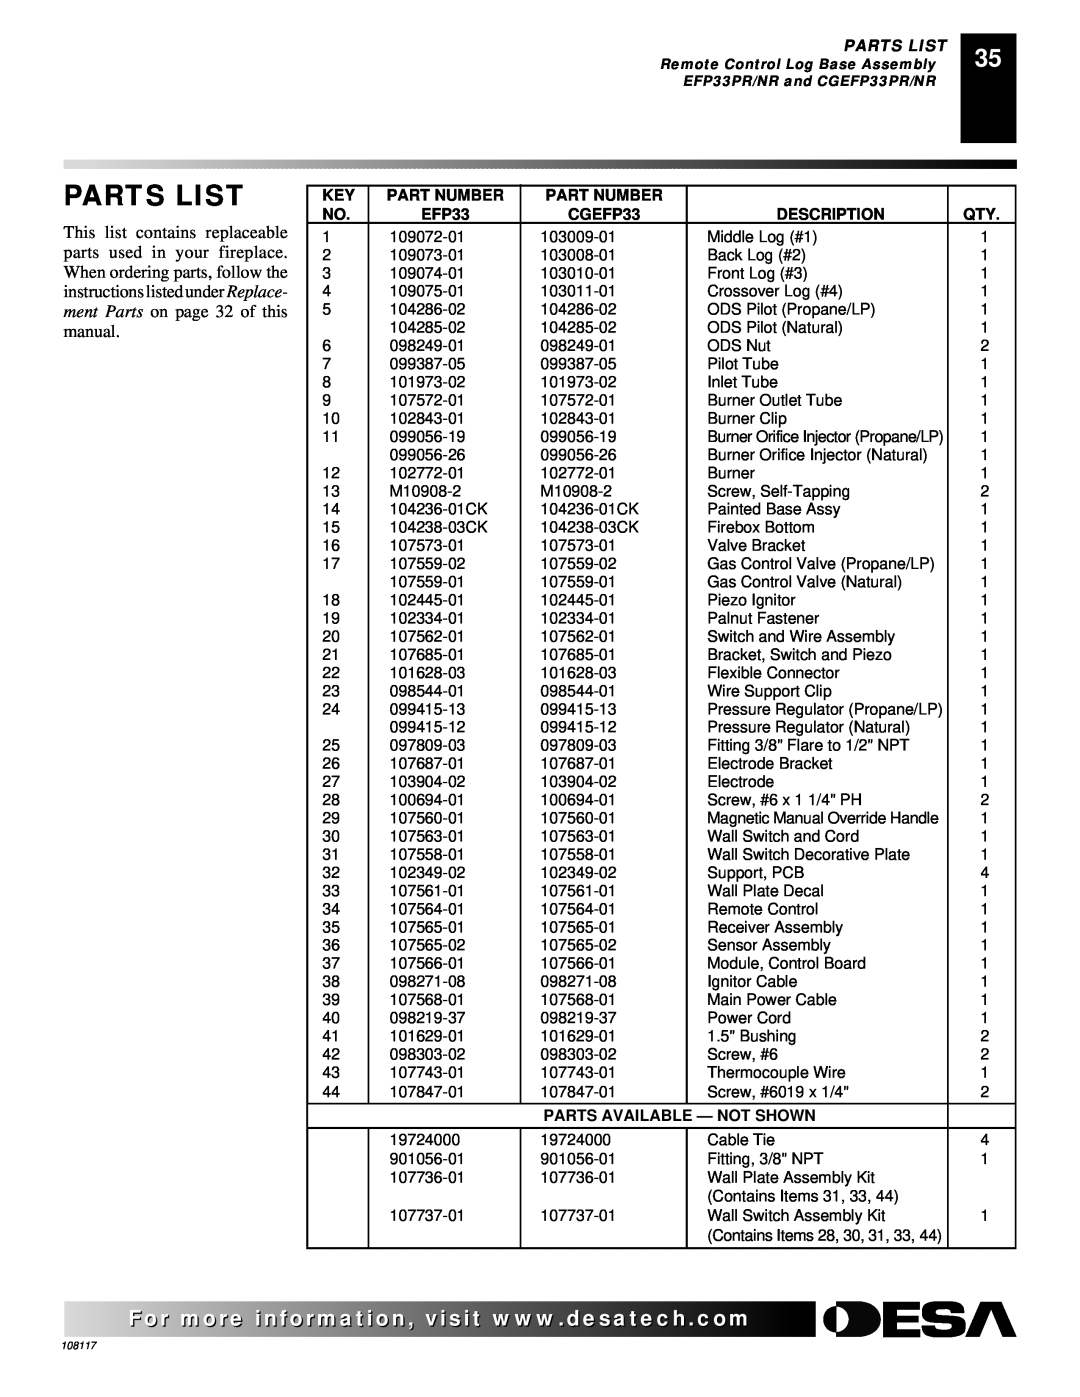 Desa CGEFP33PR, VTGF33NR, VTGF33PR installation manual Parts List, Part Number, Description, Parts Available - Not Shown 